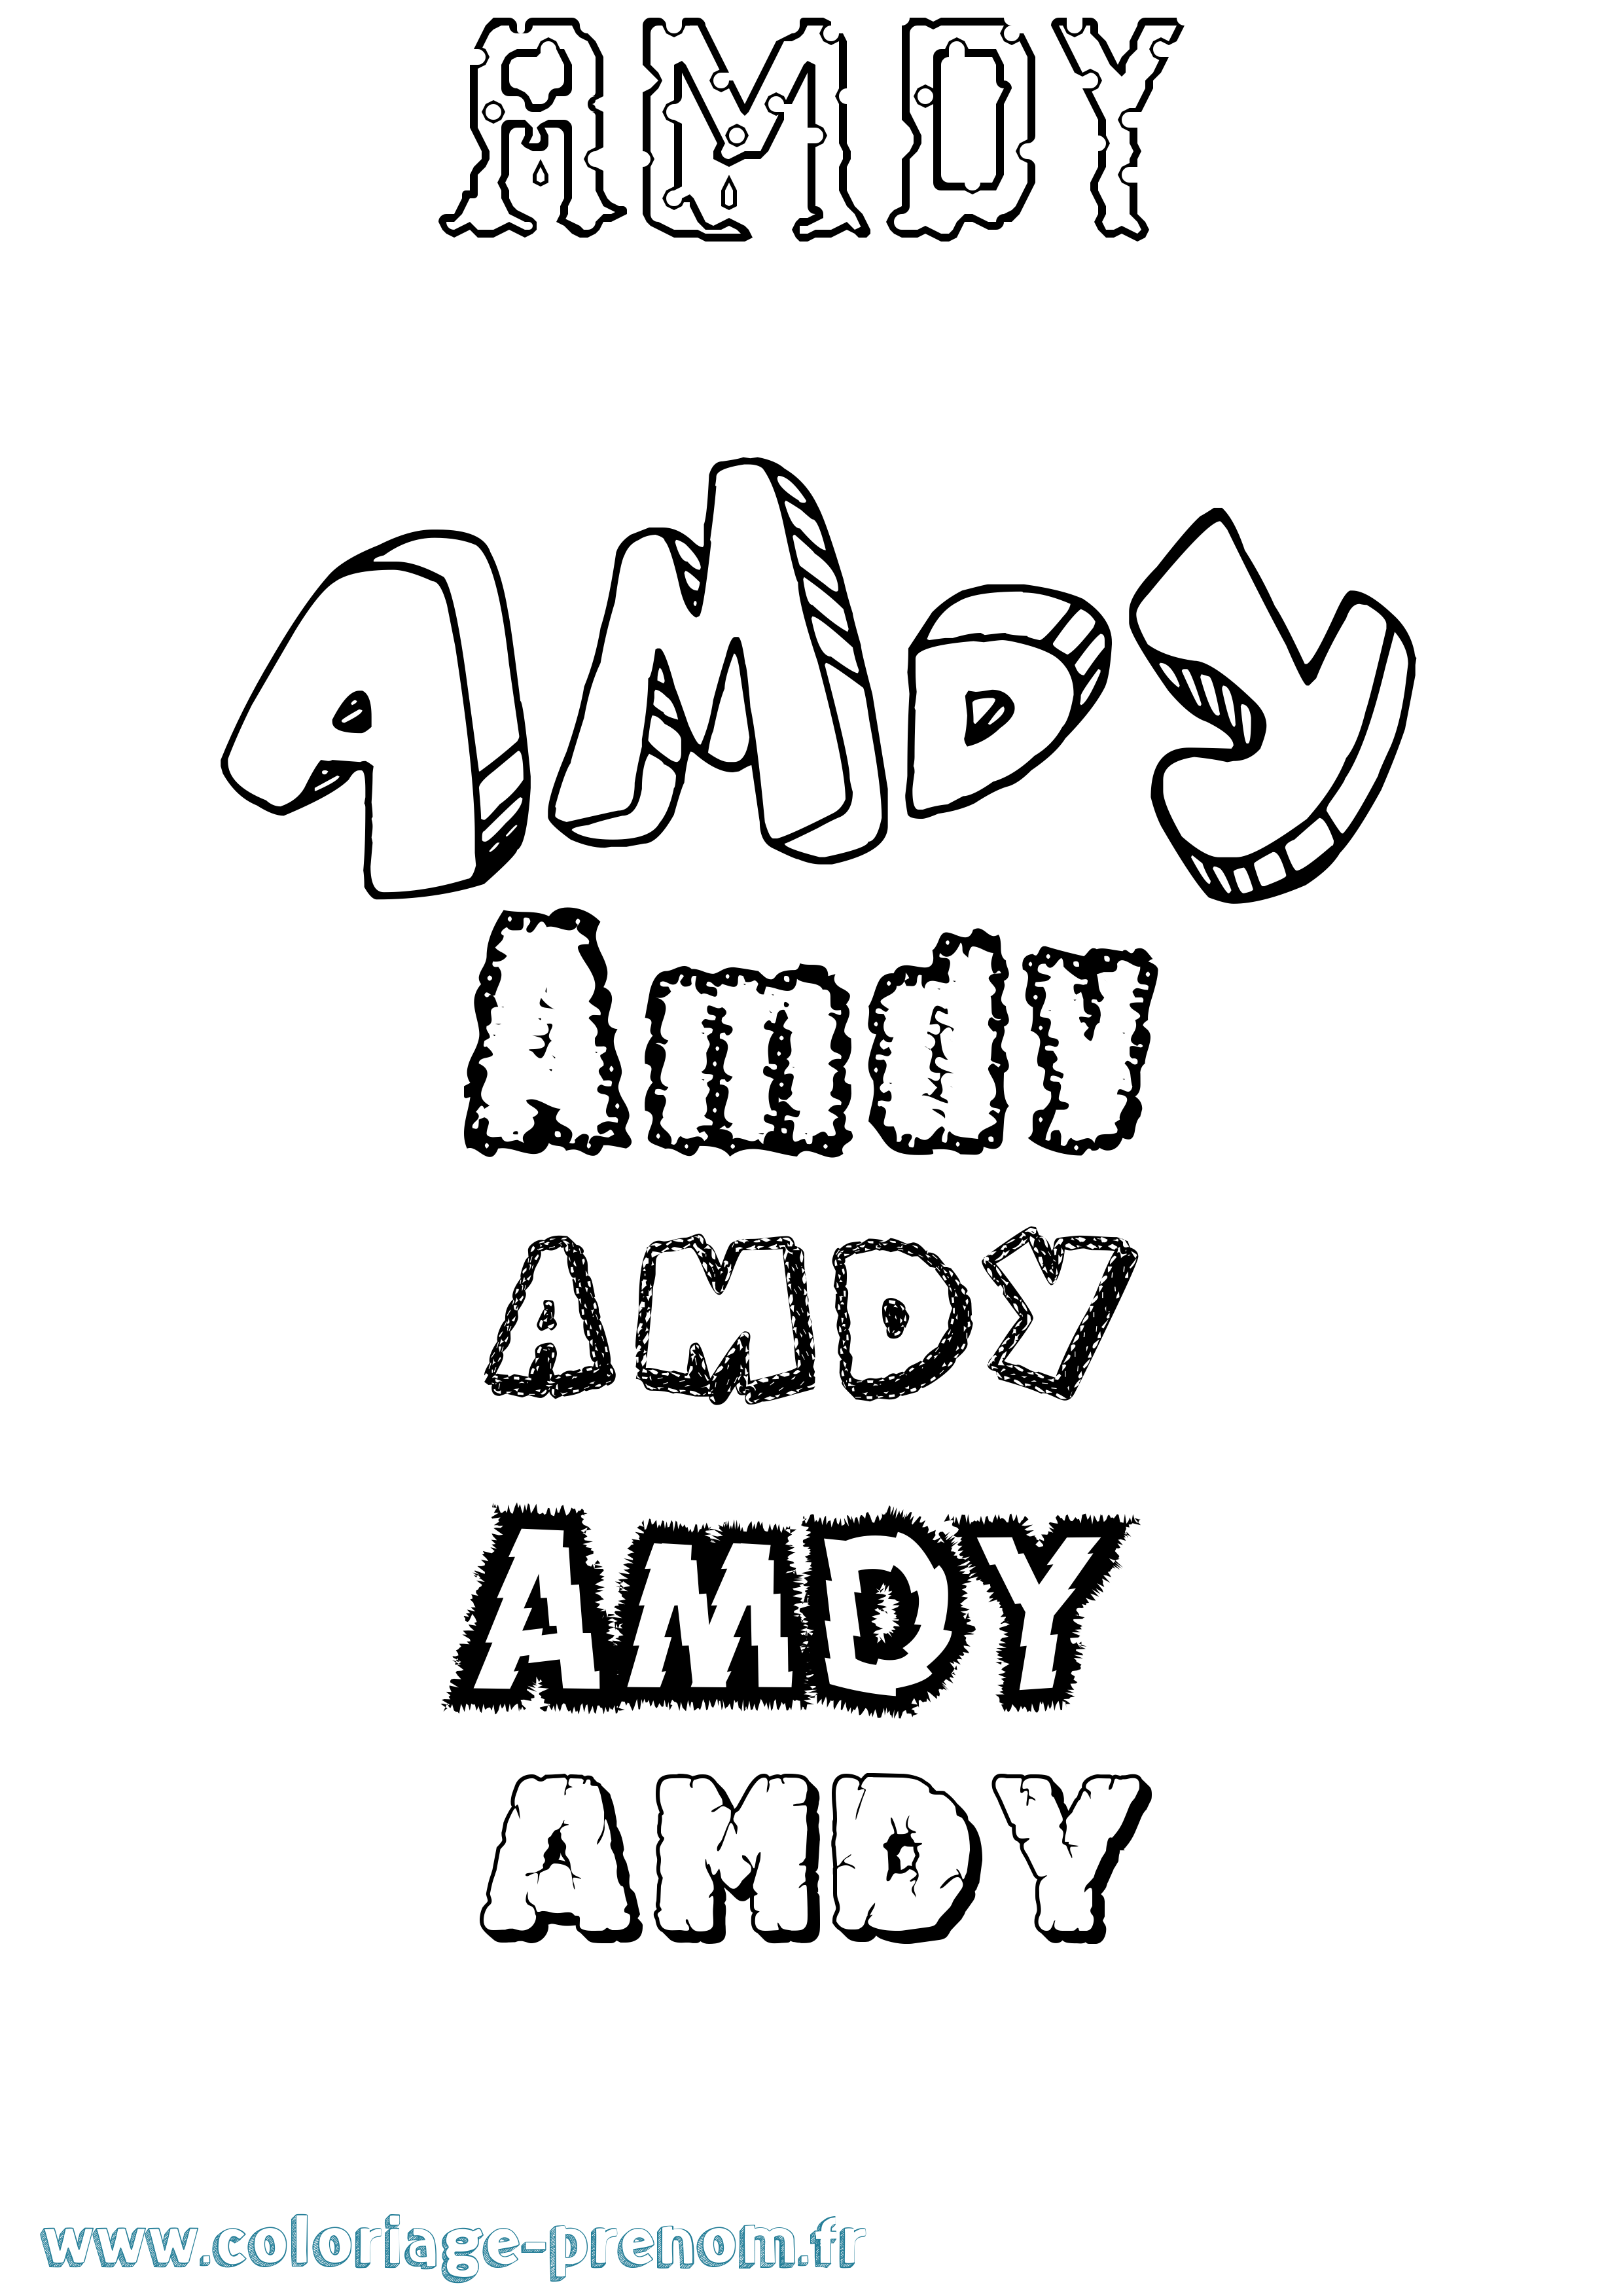 Coloriage prénom Amdy Destructuré